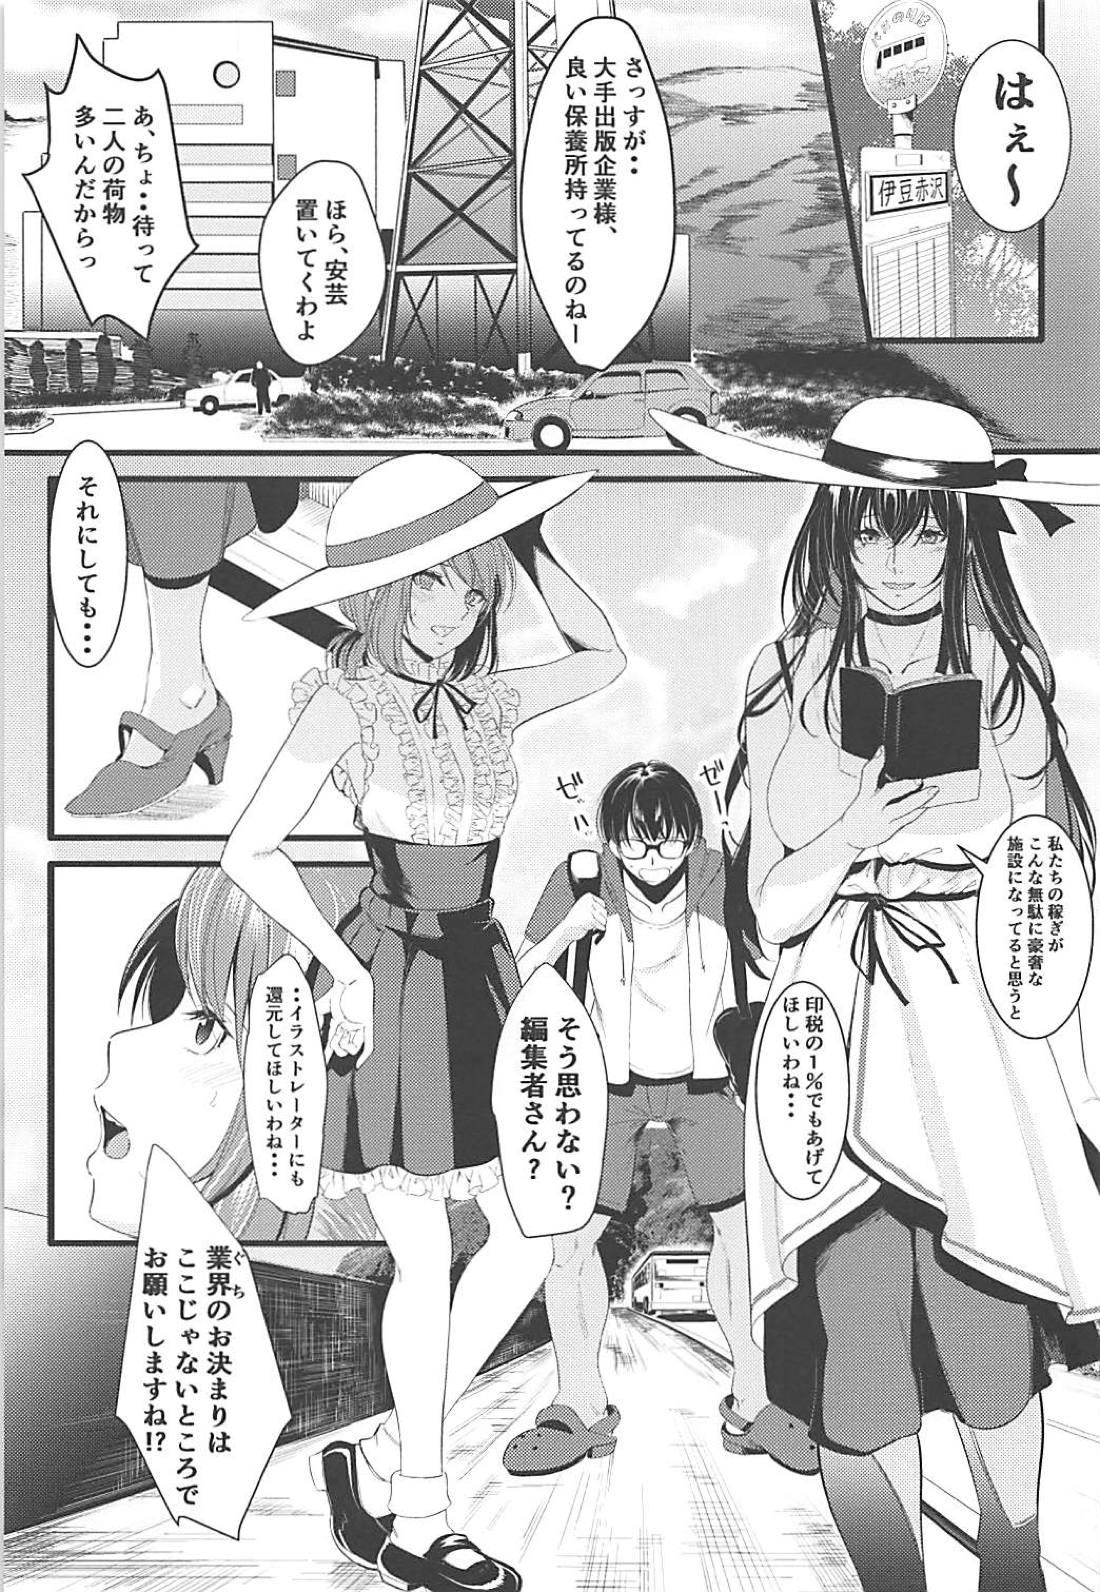 People Having Sex Saenai Futari no Kurashikata 3 - Saenai heroine no sodatekata Underwear - Page 2